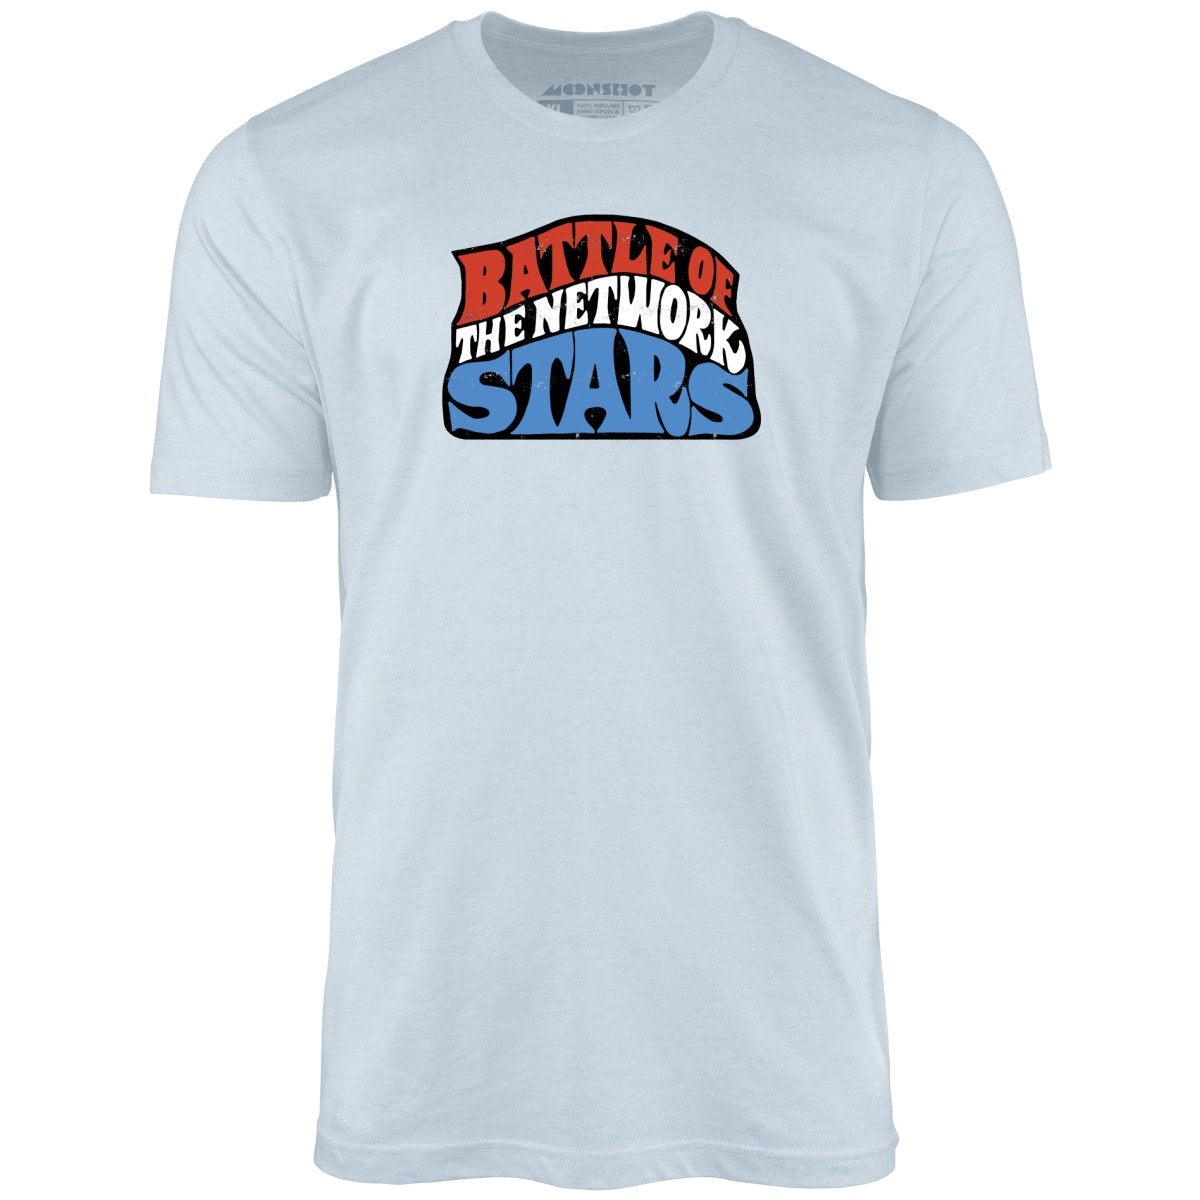 Battle of the Network Stars - Unisex T-Shirt